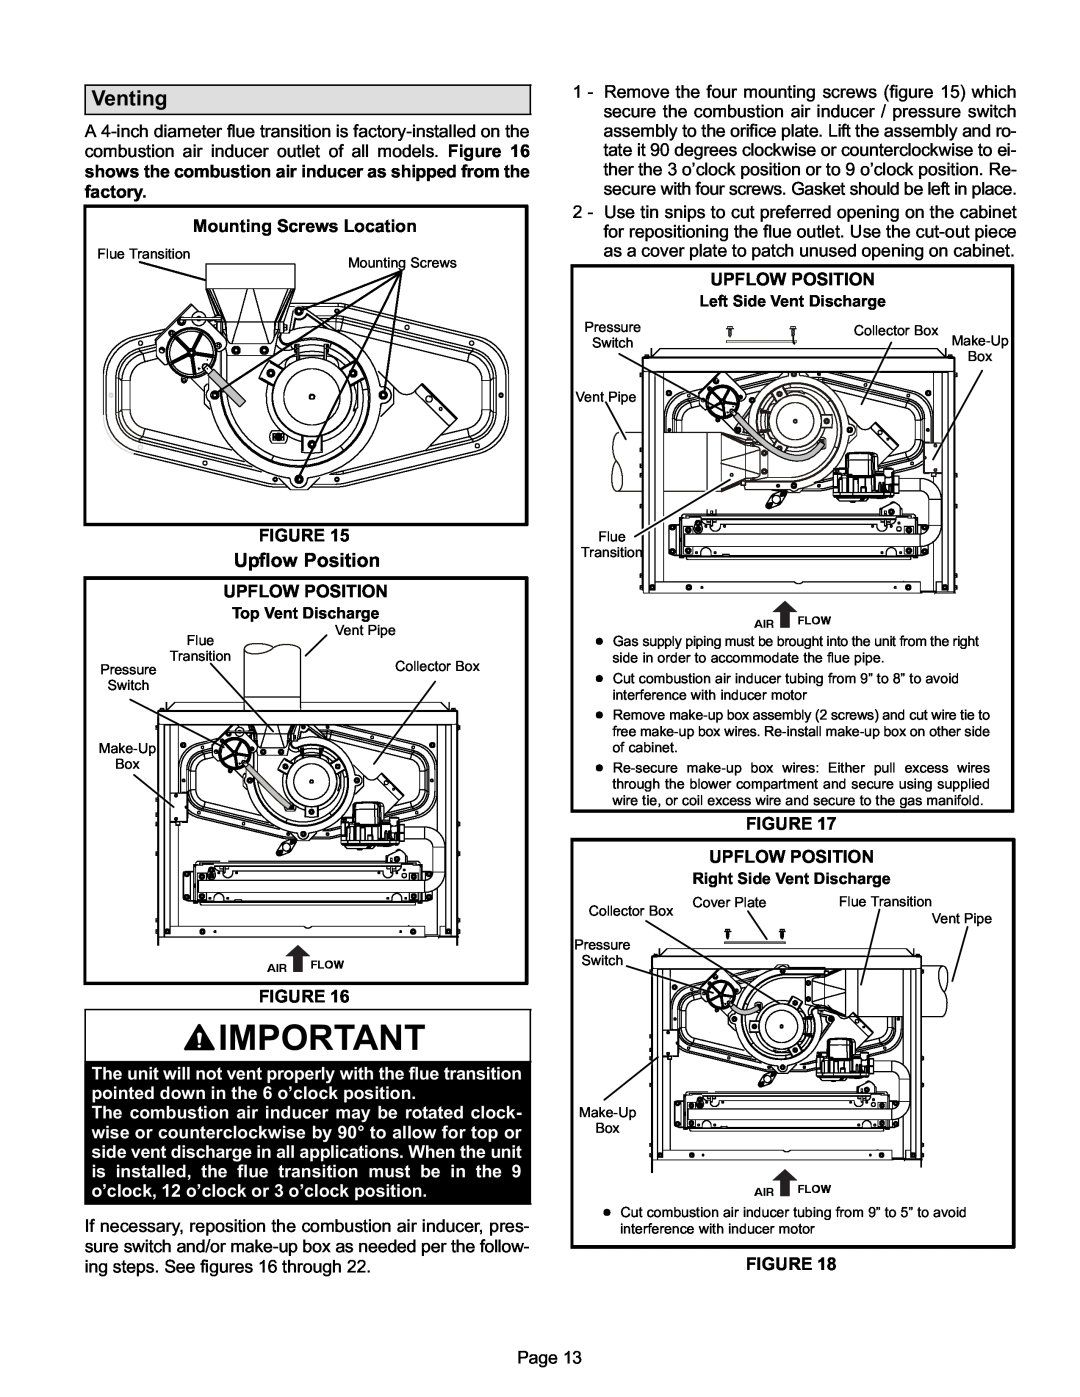 Lennox International Inc Merit Series Gas Furnace installation instructions Venting, Upflow Position 